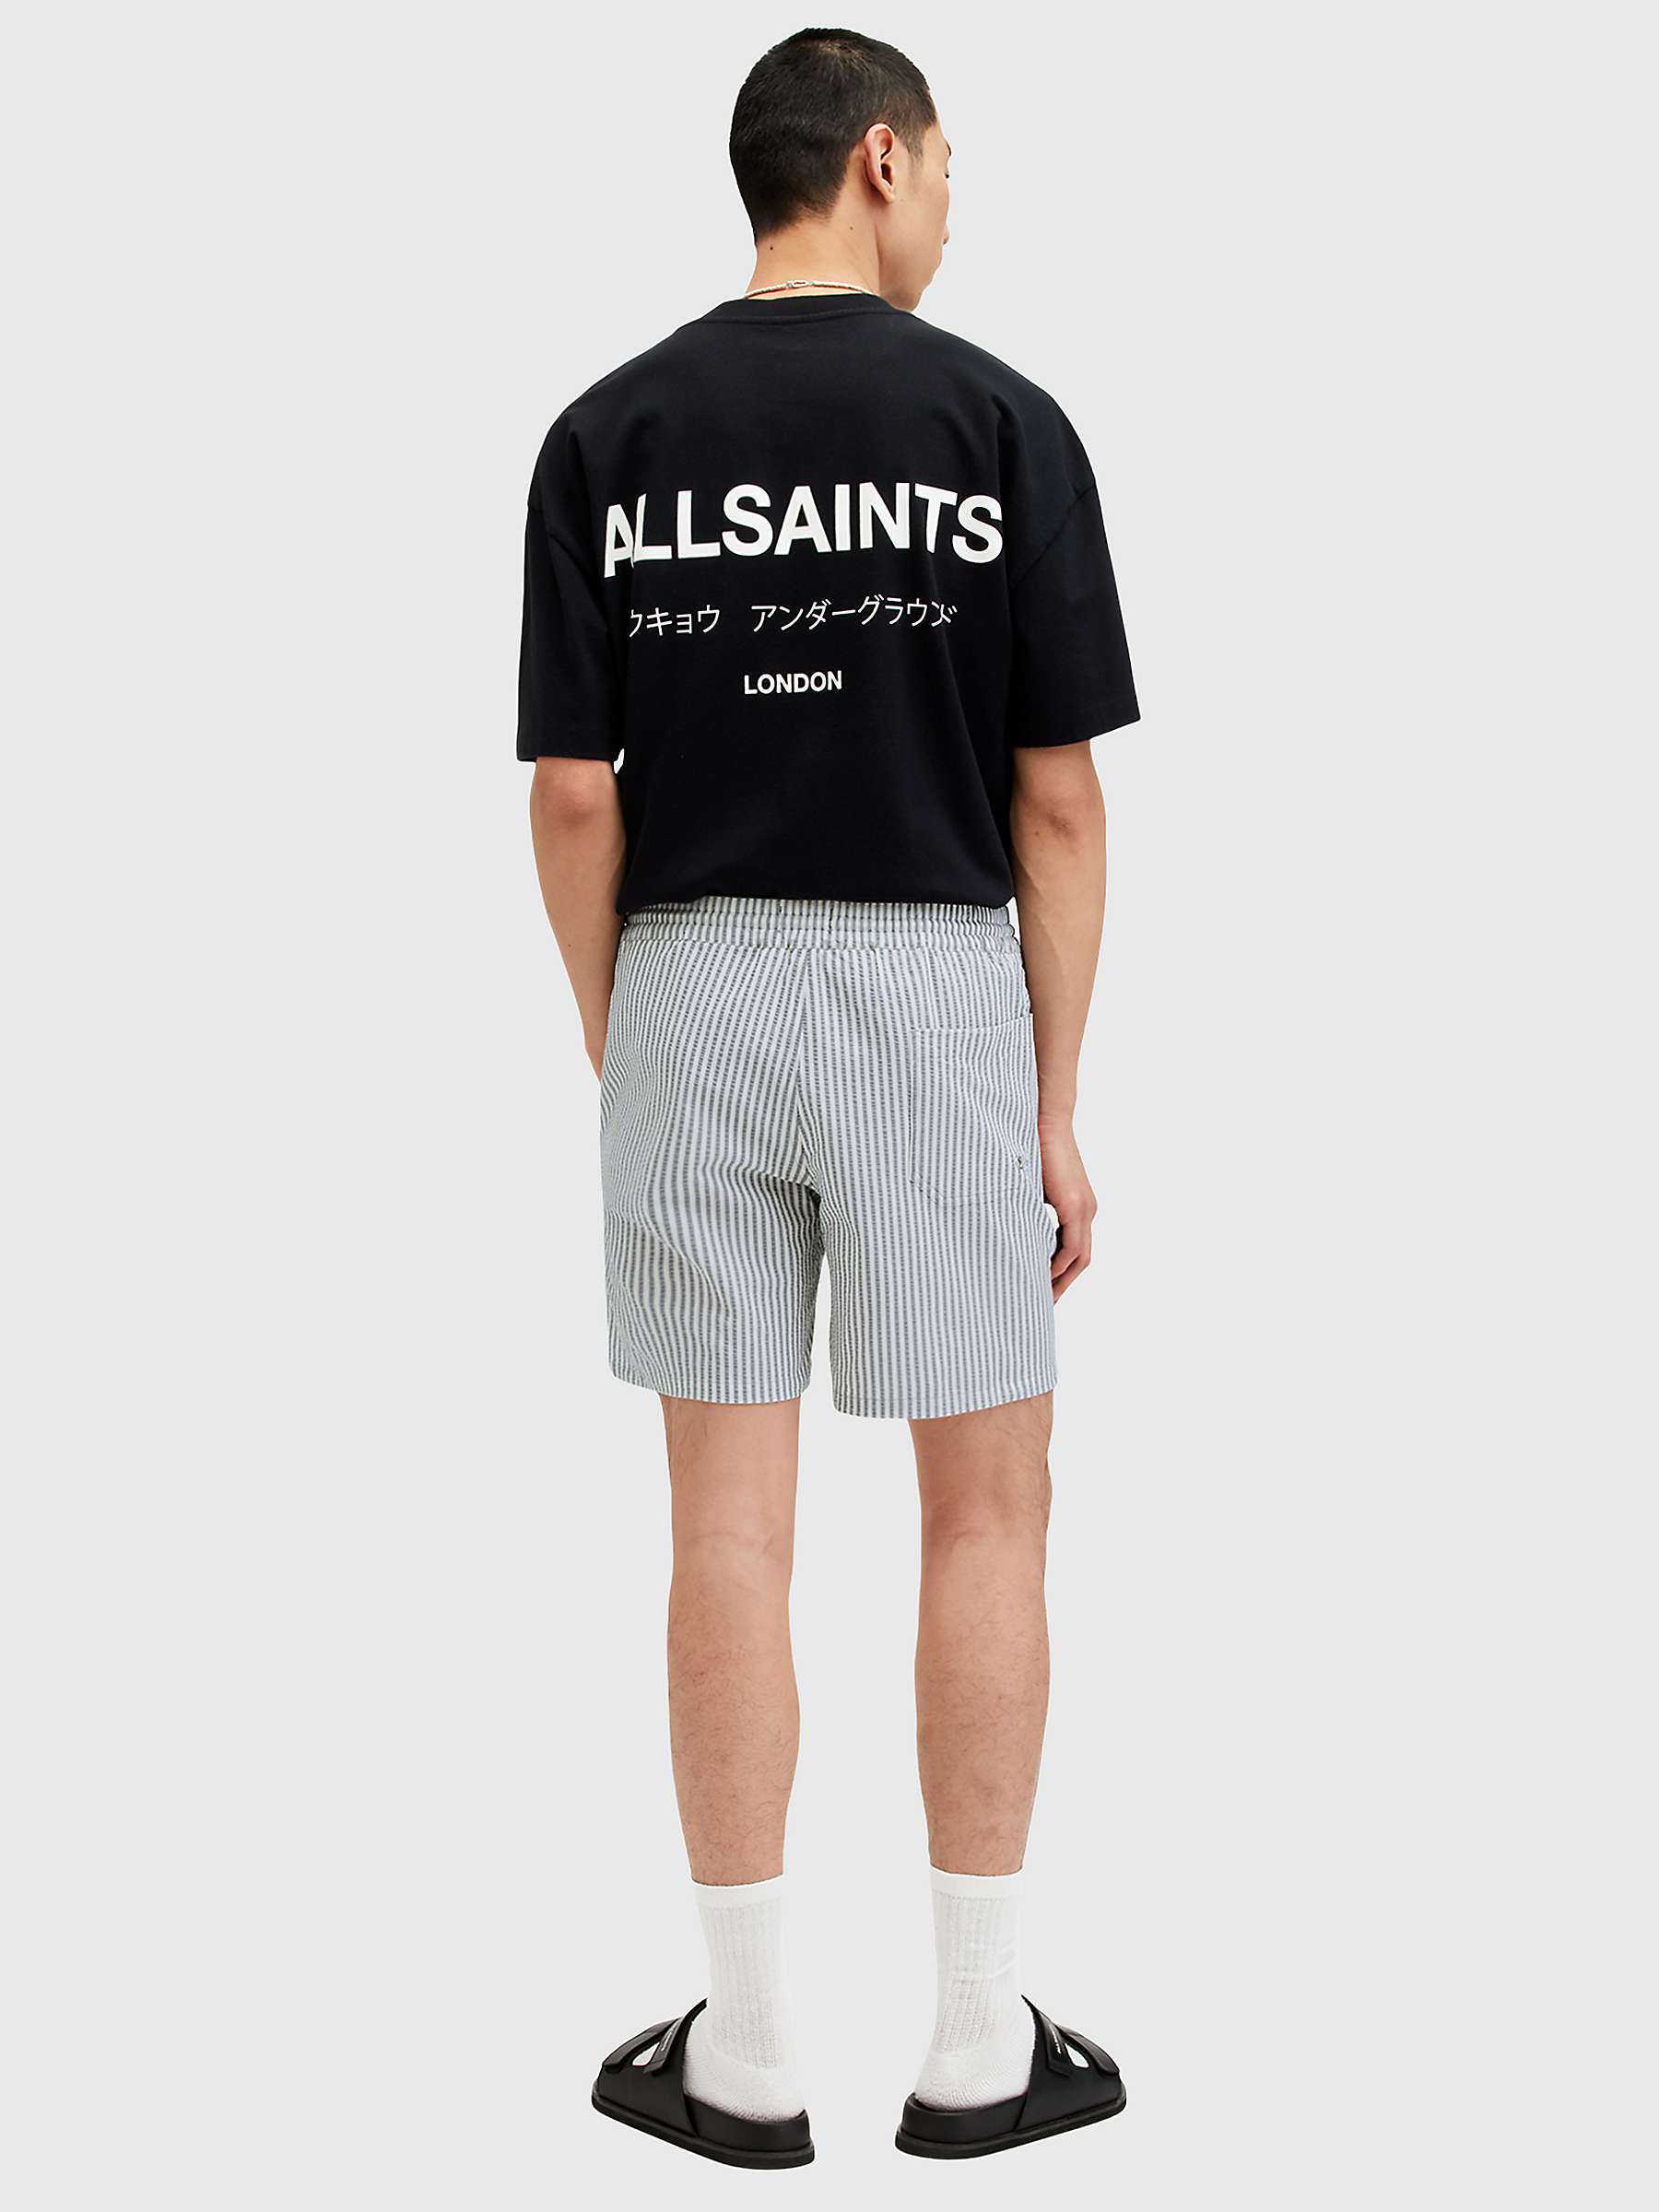 Buy AllSaints Warden Stripe Swim Shorts, White/Grey Online at johnlewis.com